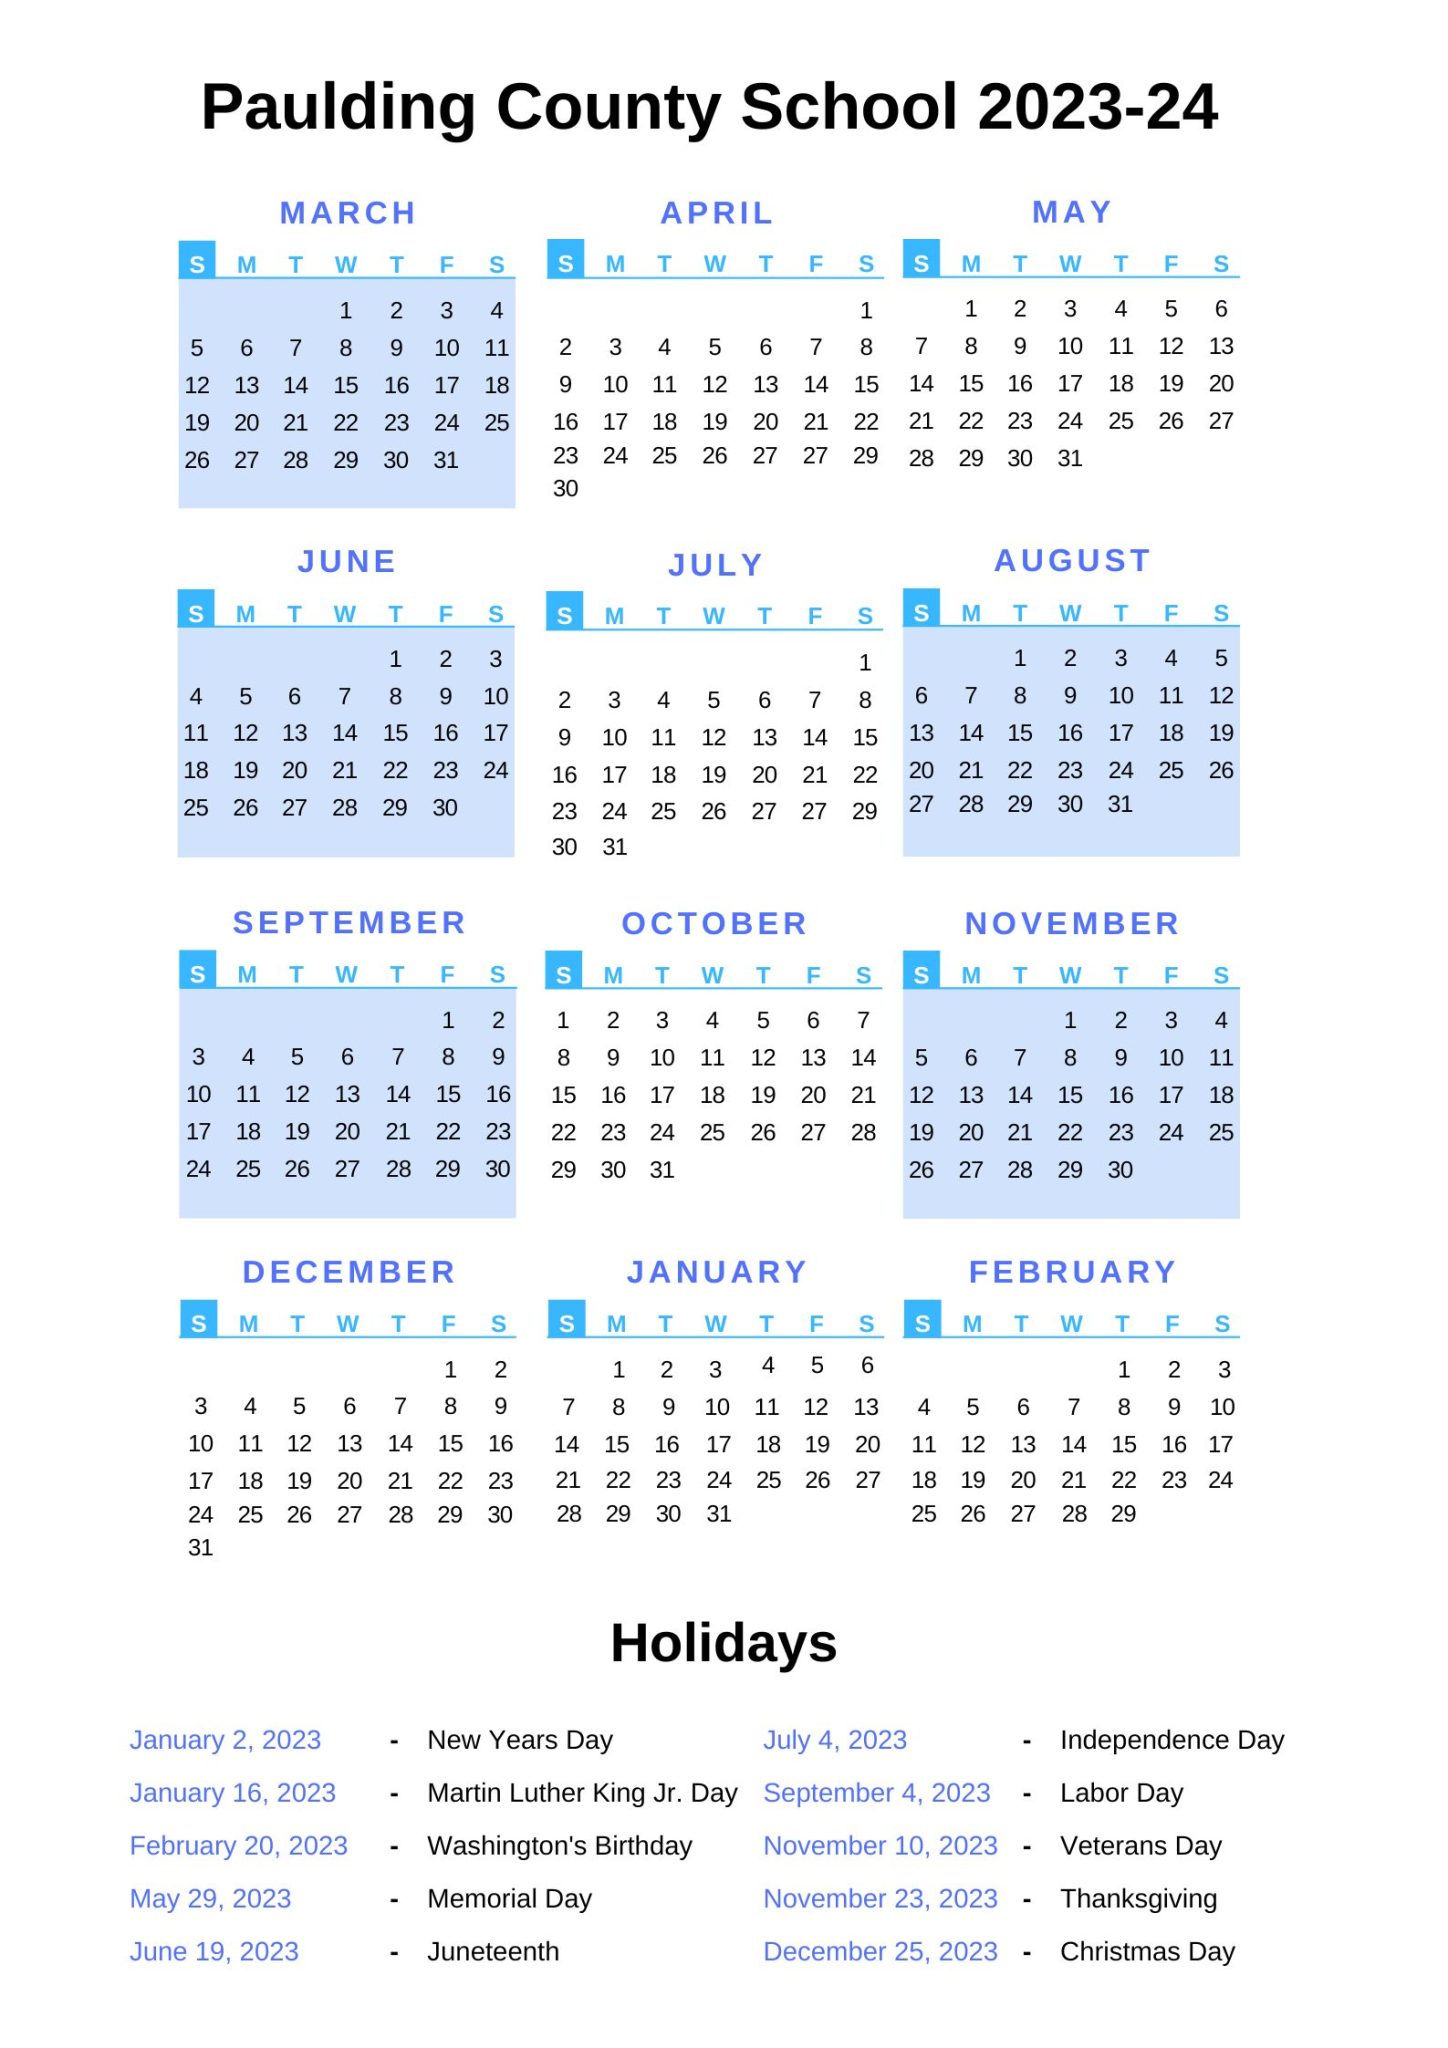 Paulding County Schools Calendar [PCS] 202324 with Holidays